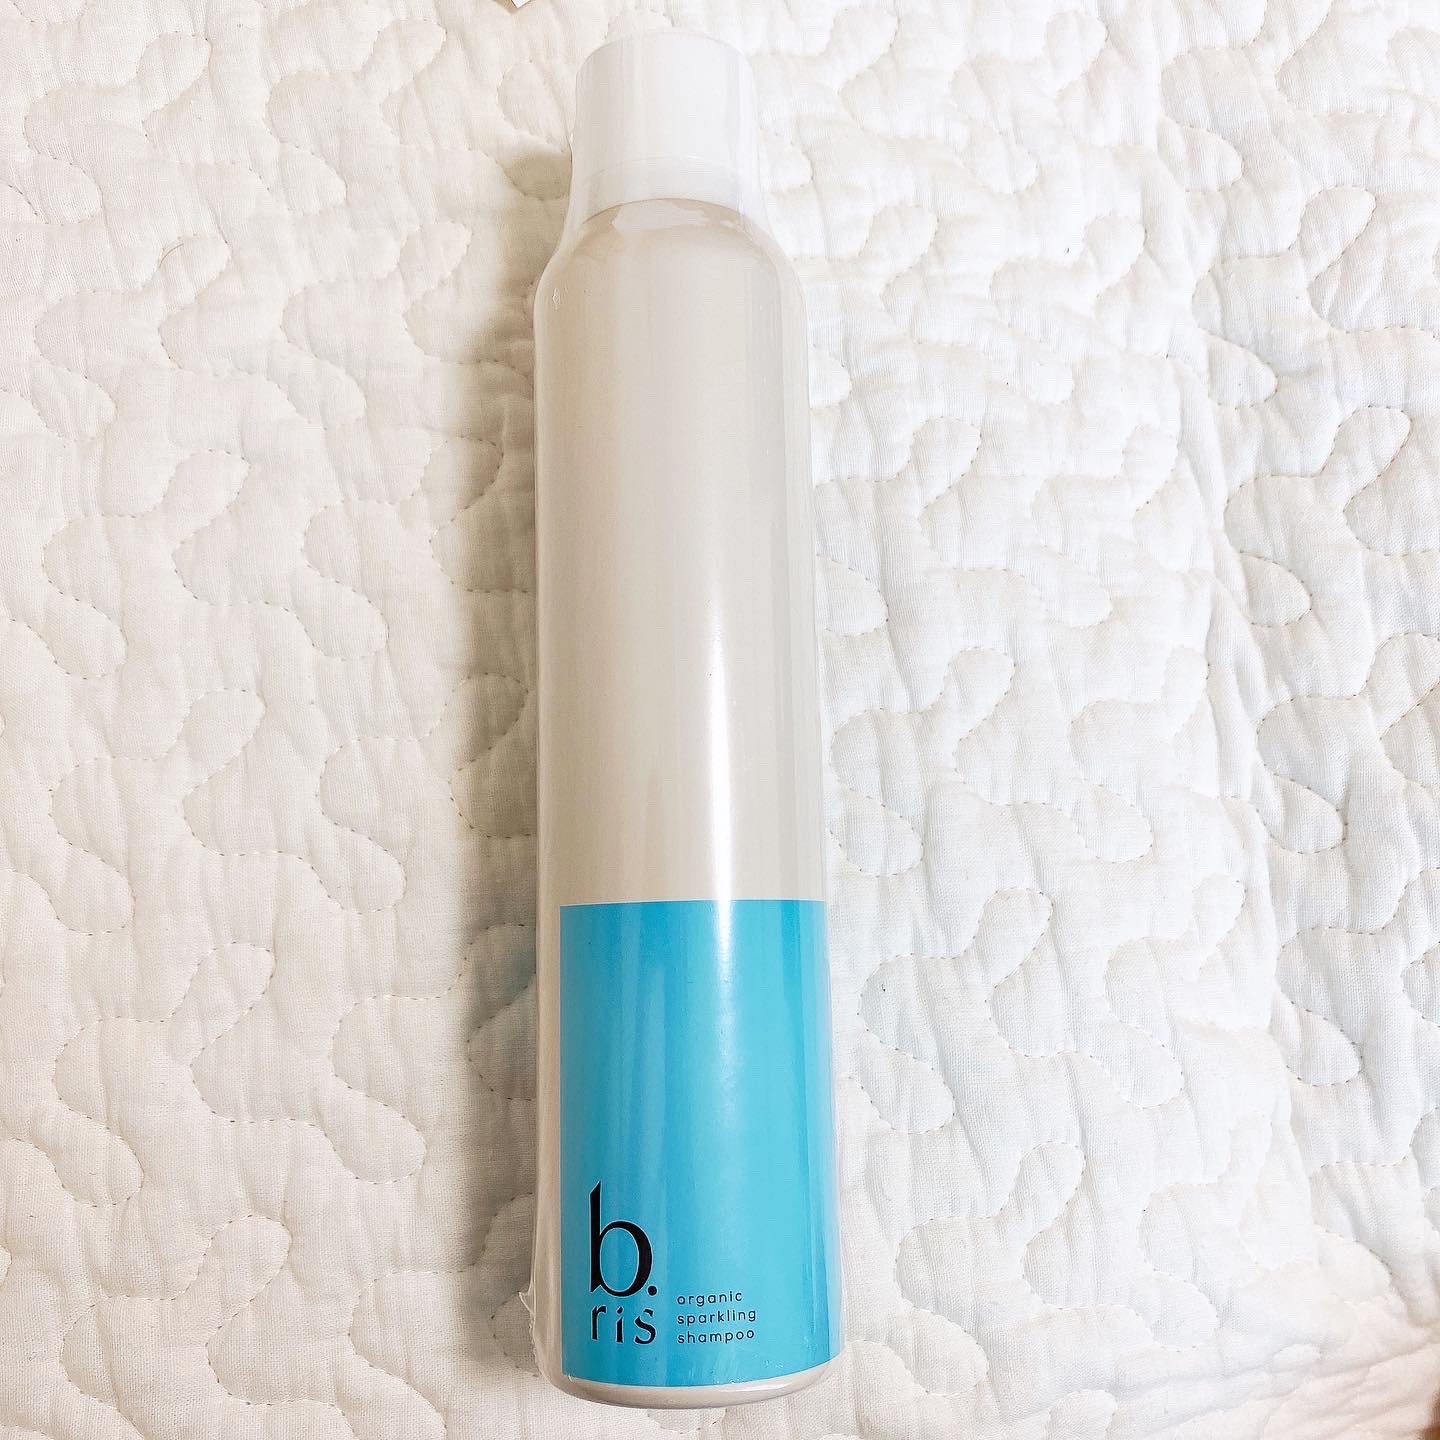 b.ris / organic sparkling shampooの公式商品情報｜美容・化粧品情報 